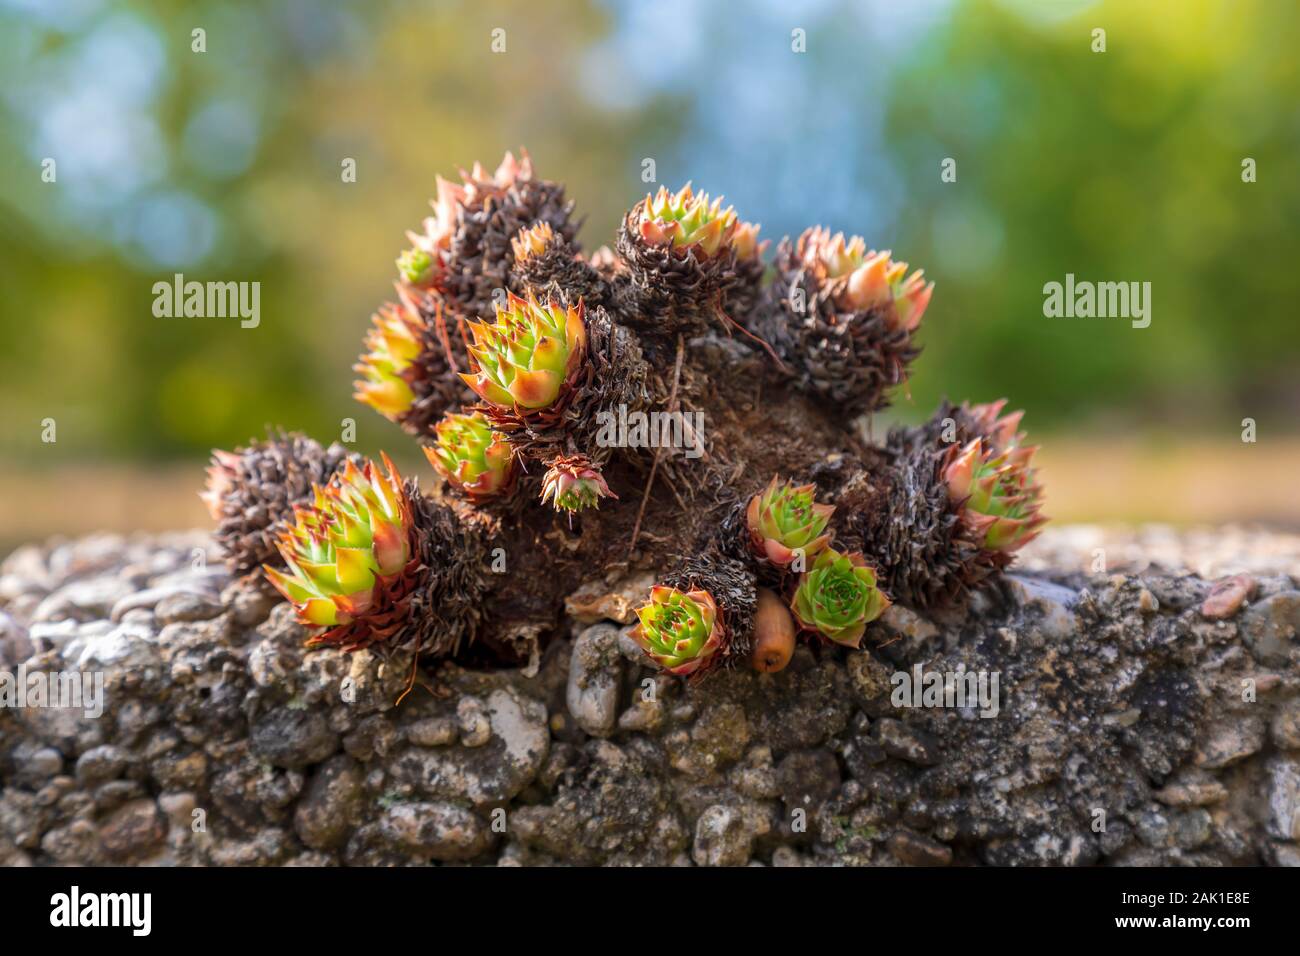 Closeup of common Houseleek plant growing on the wall. Image Stock Photo